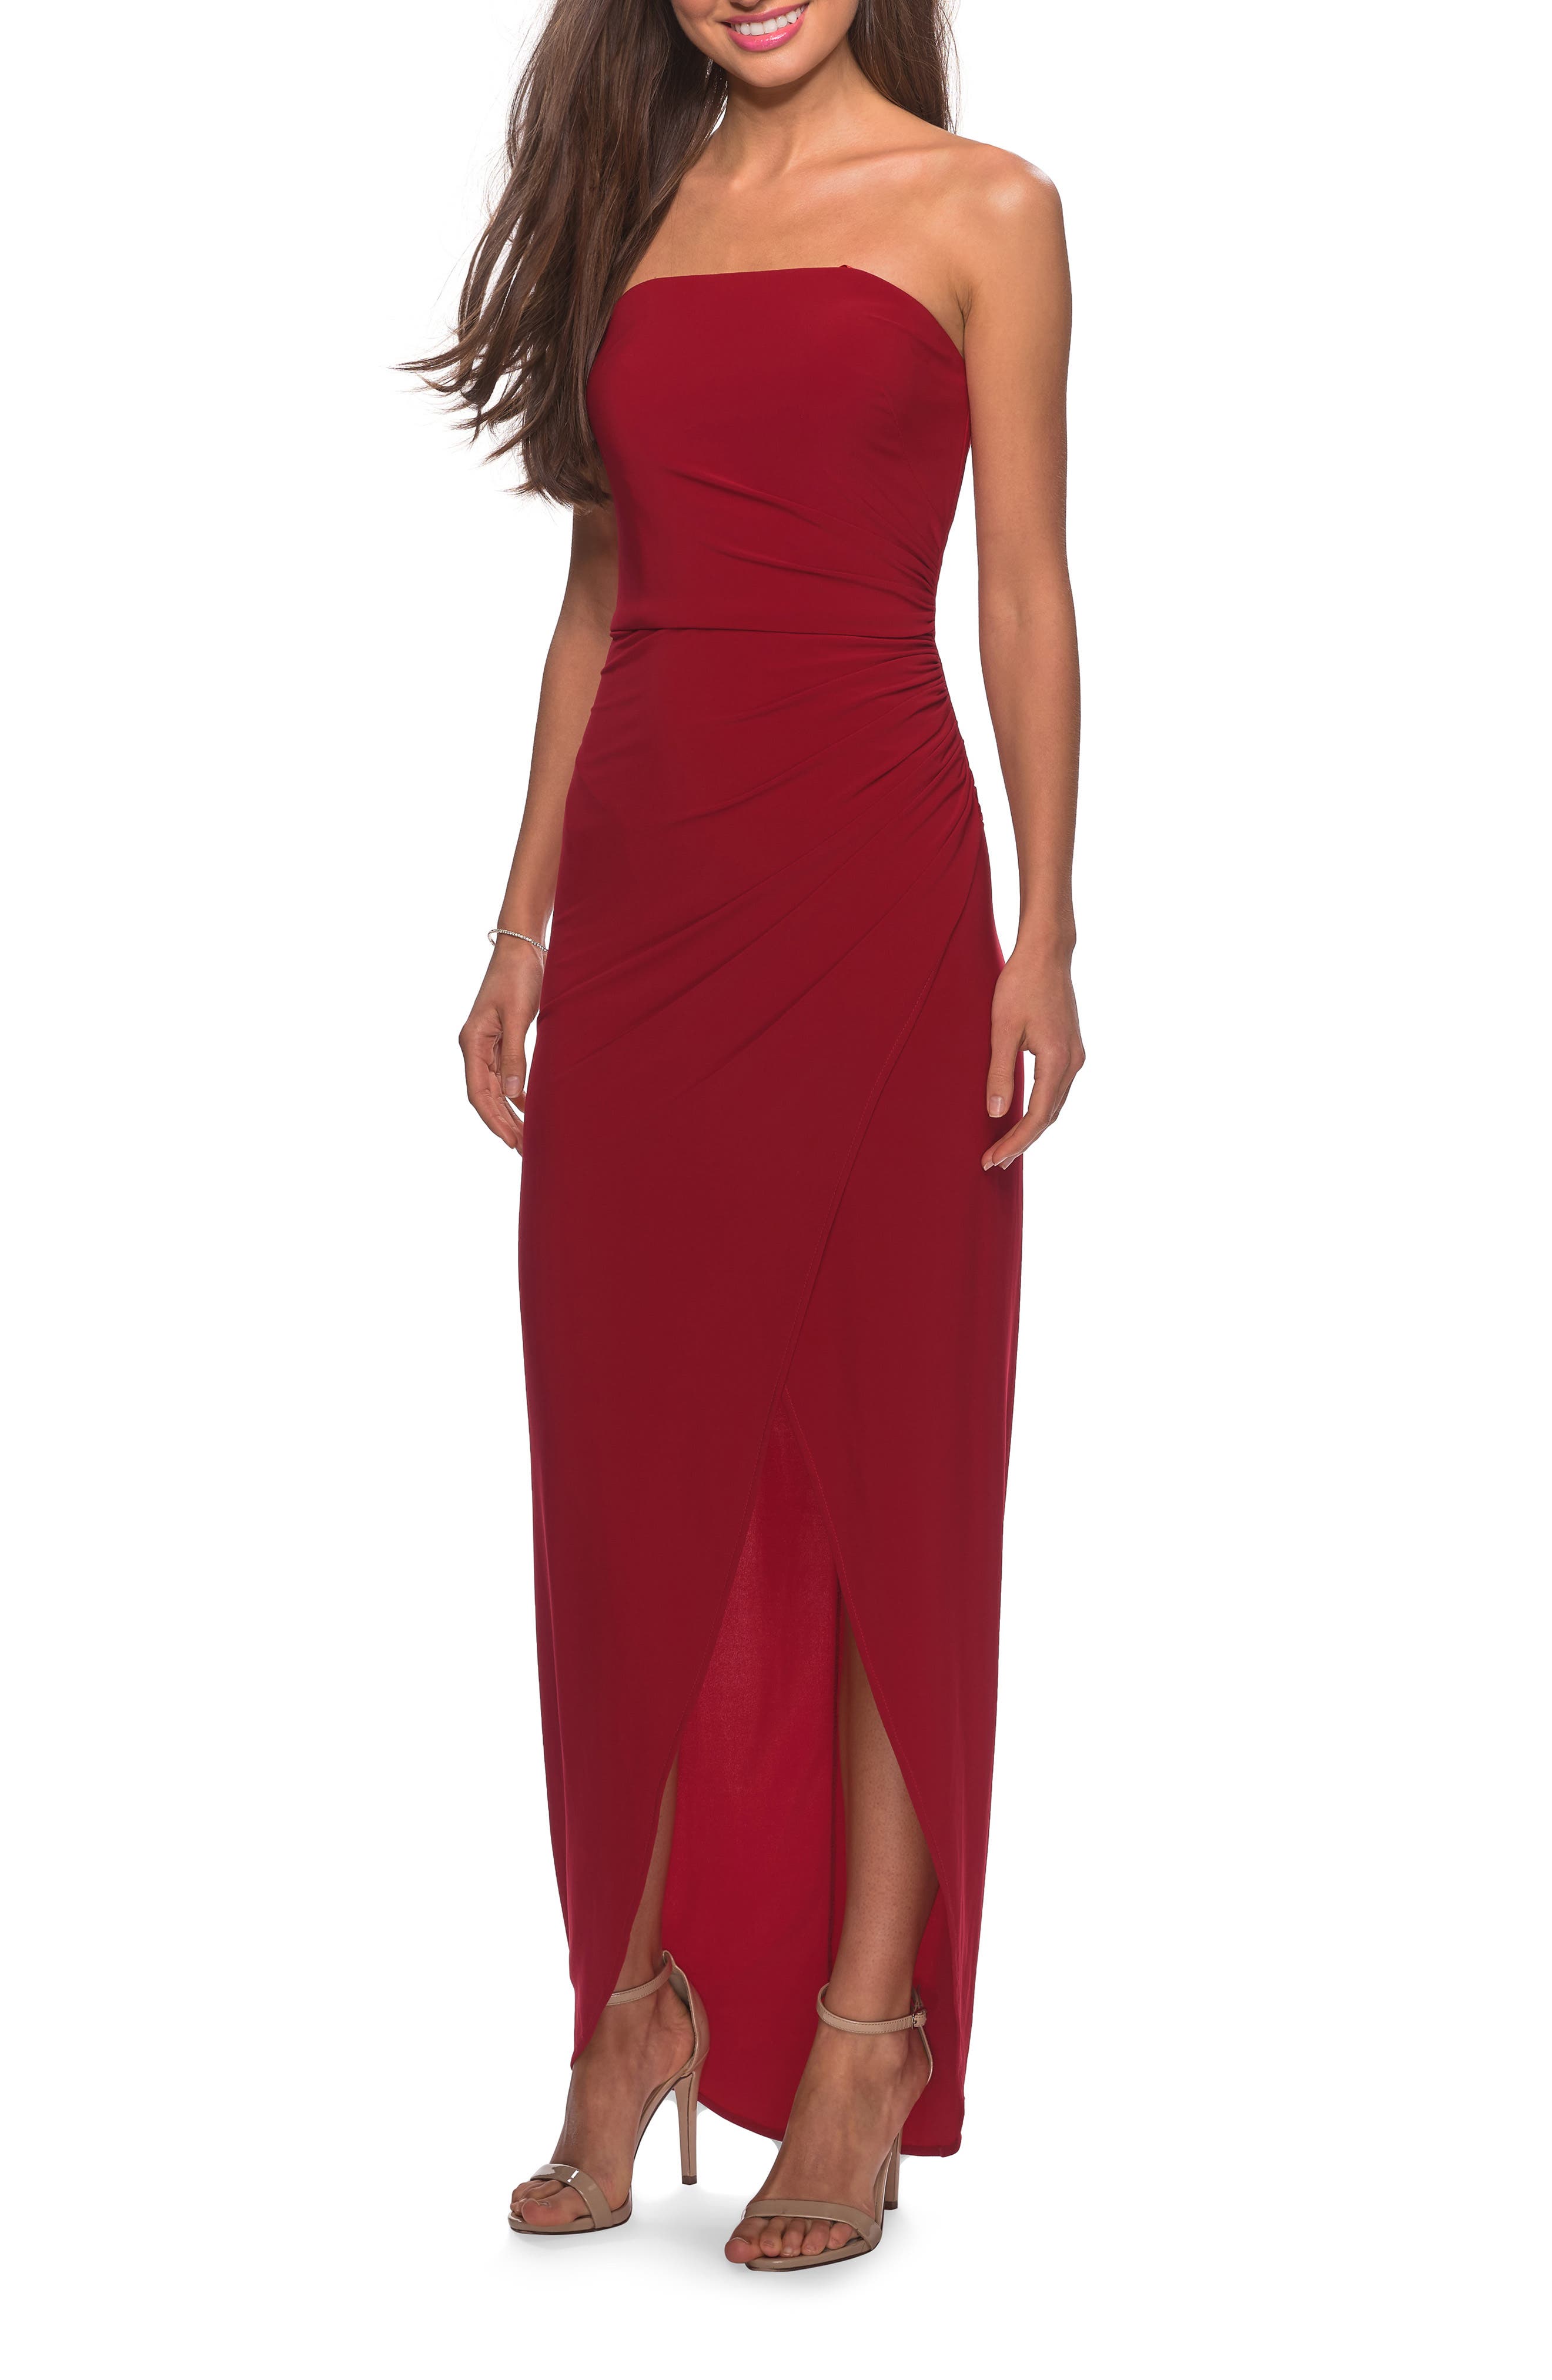 red strapless dress | Nordstrom